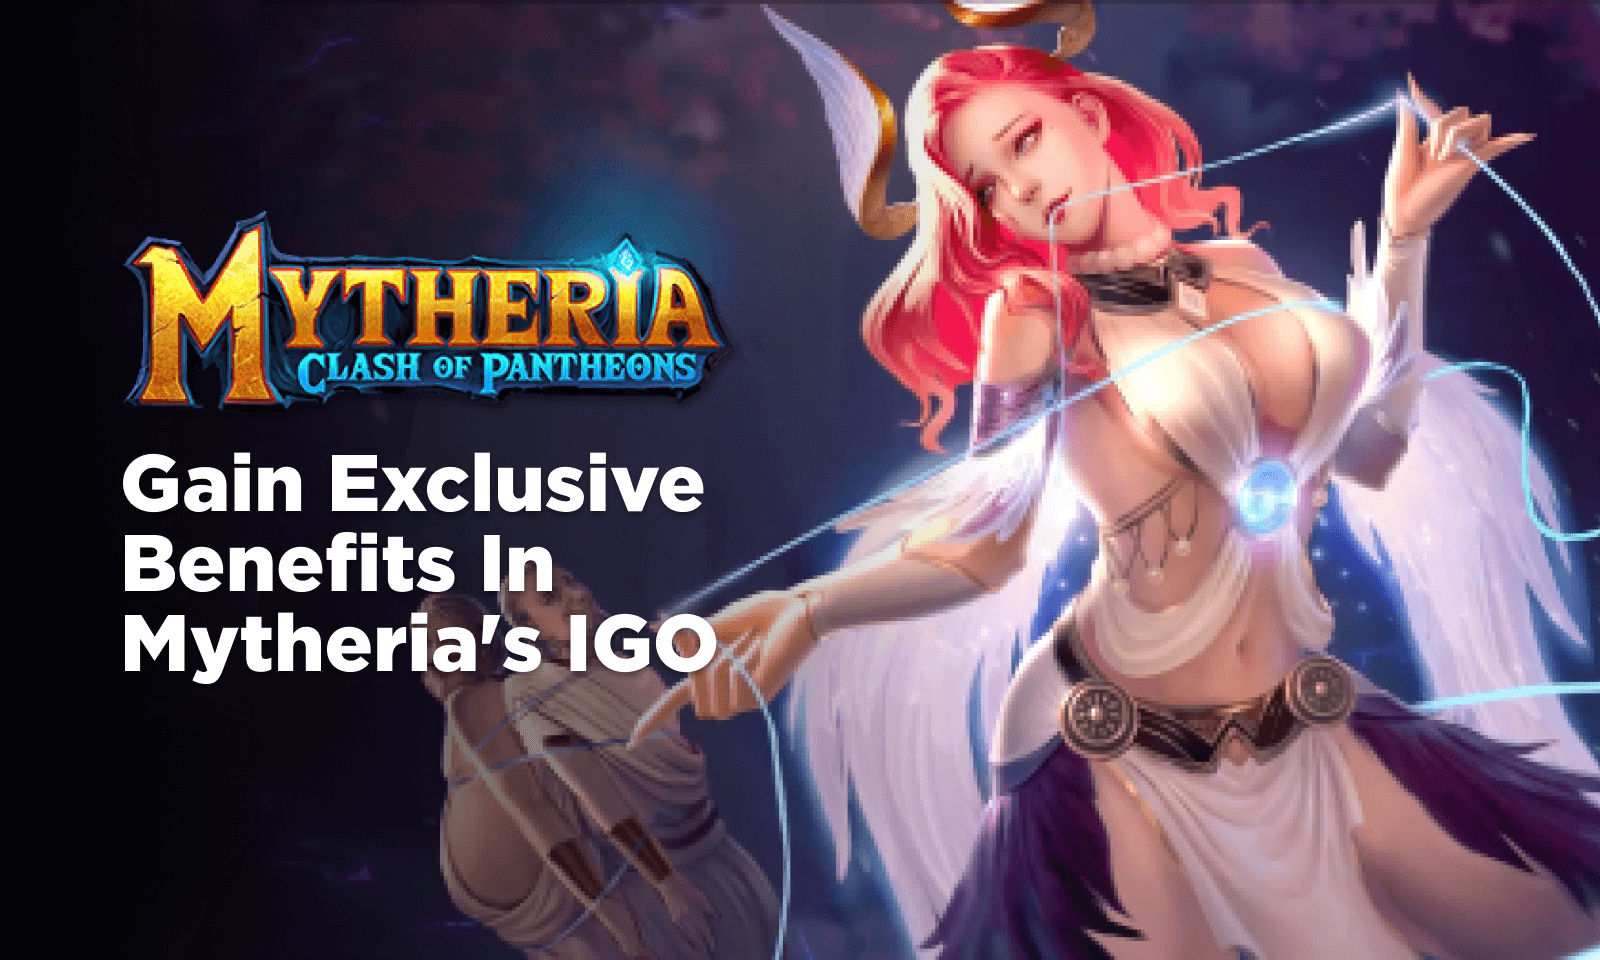 Gain Exclusive Benefits in Mytheria's IGO